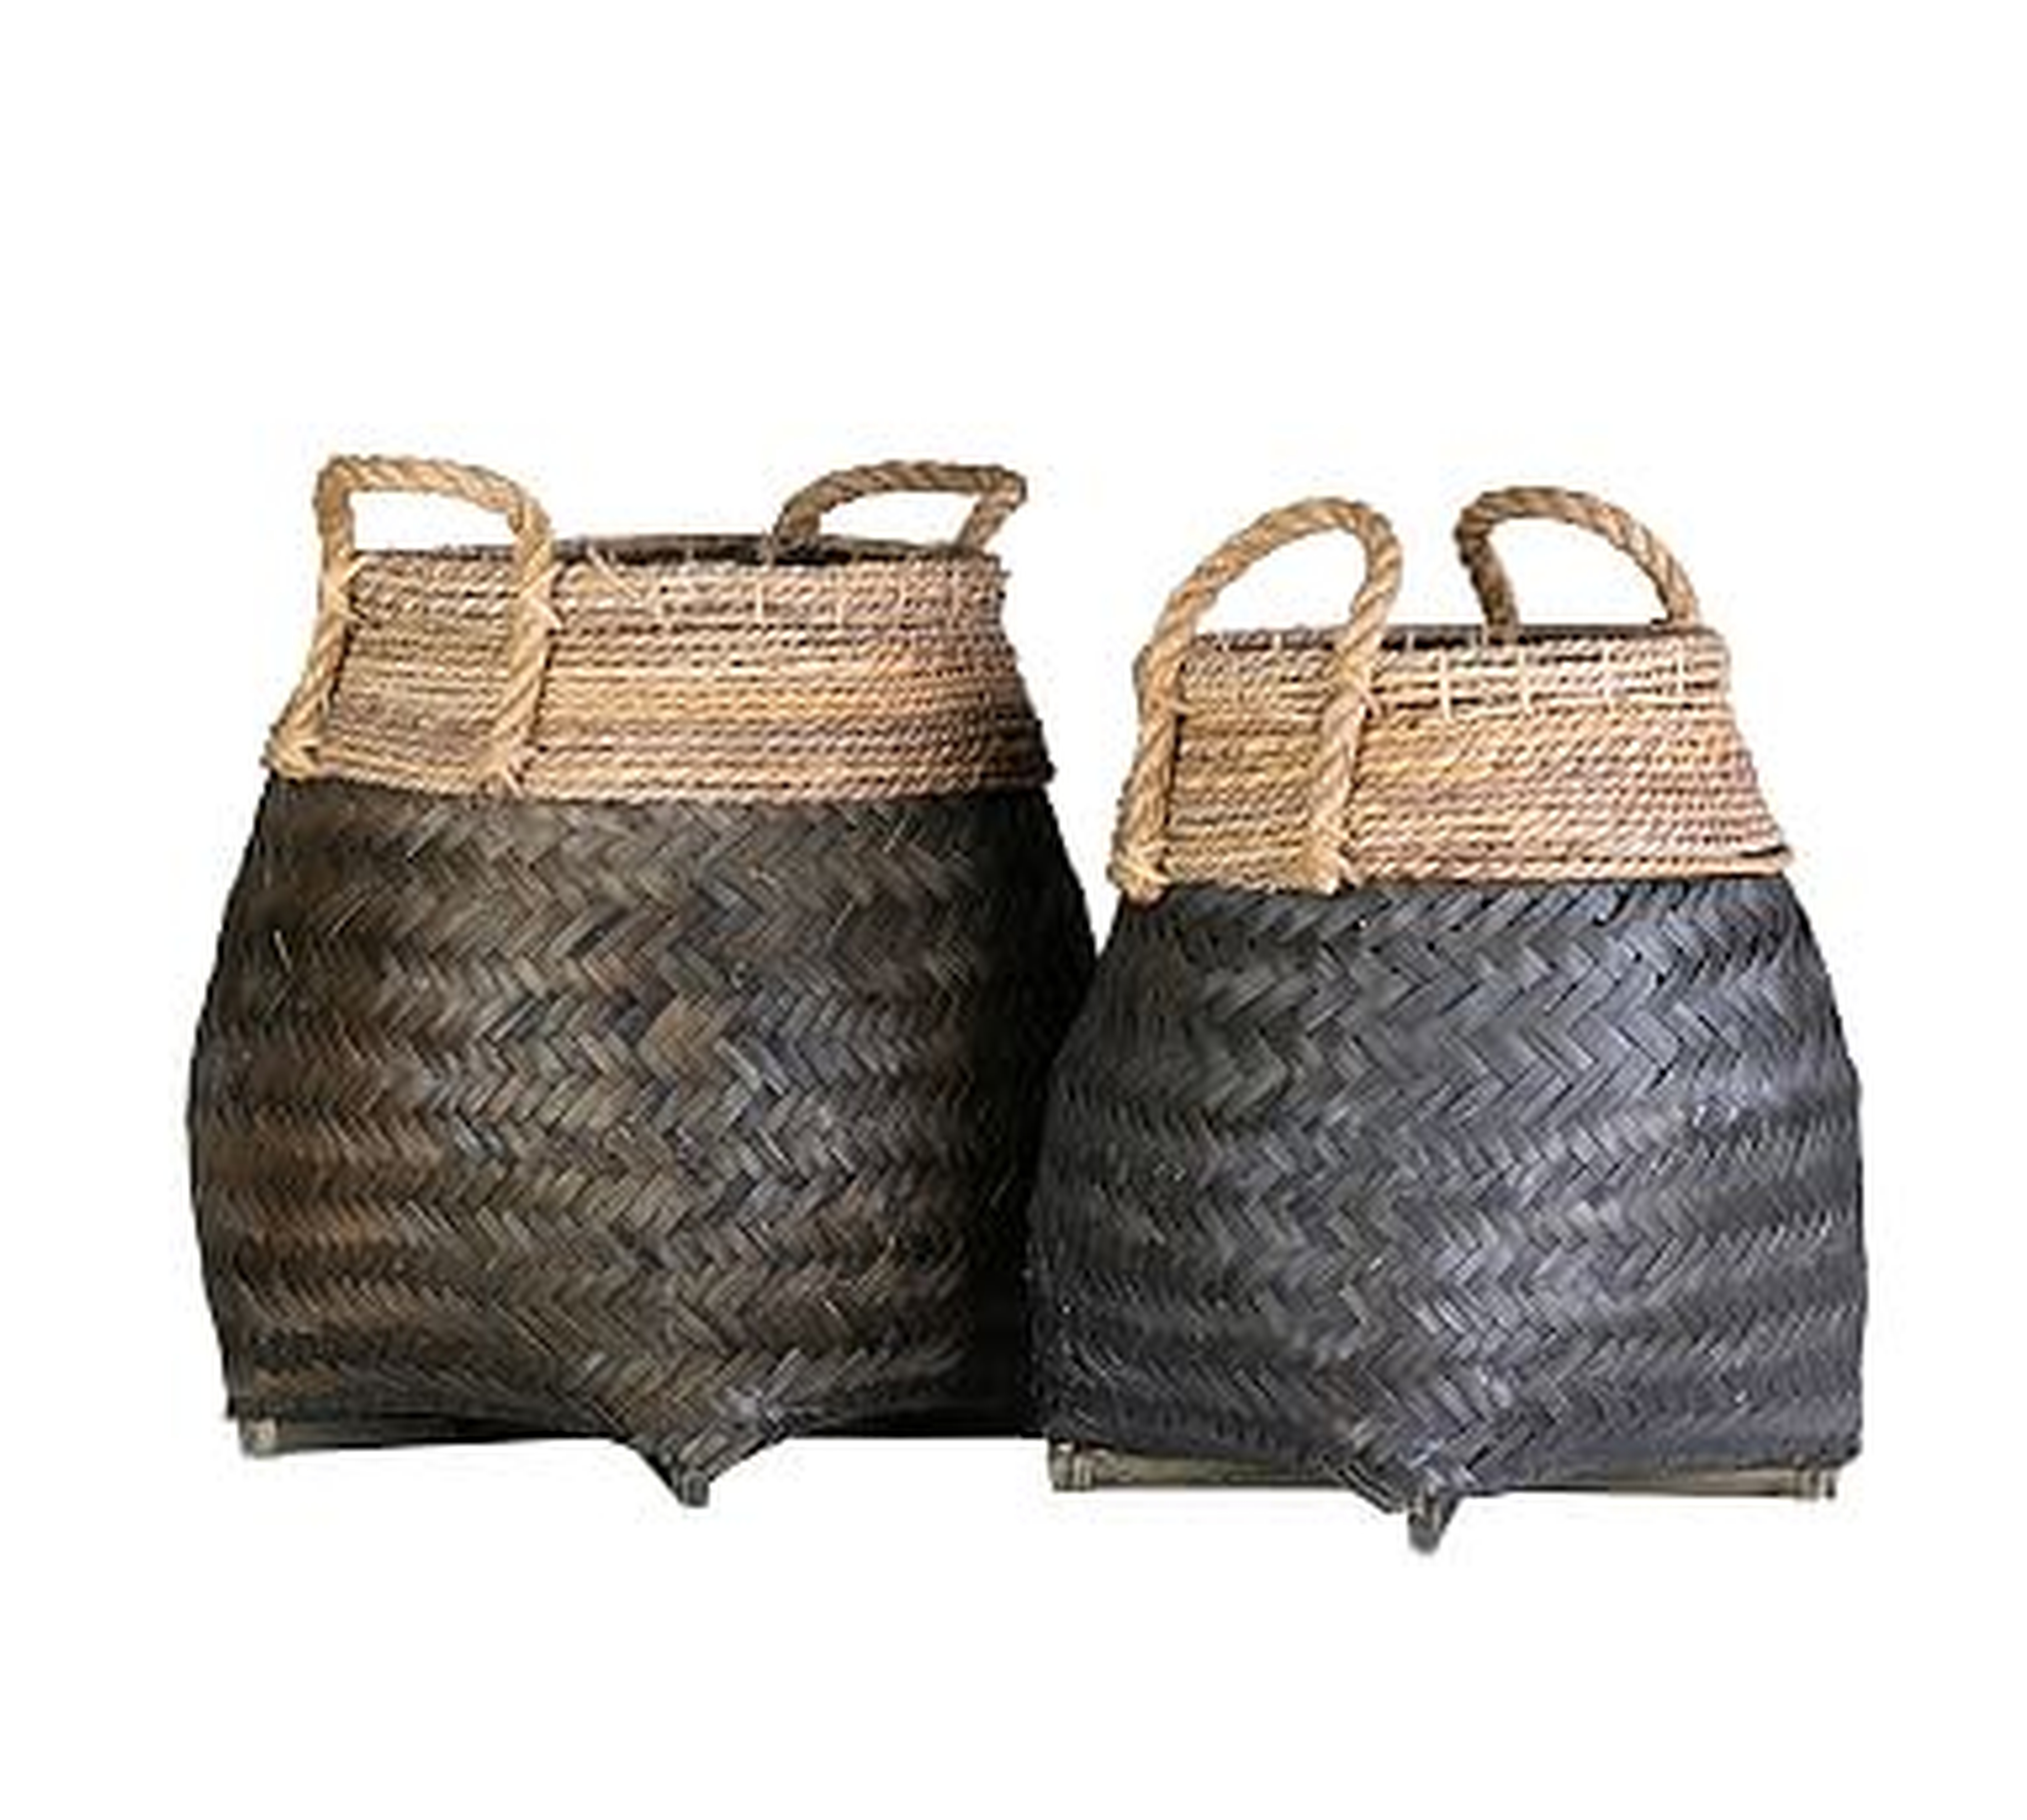 Lyon Woven Black Baskets, Set of 2 - Pottery Barn